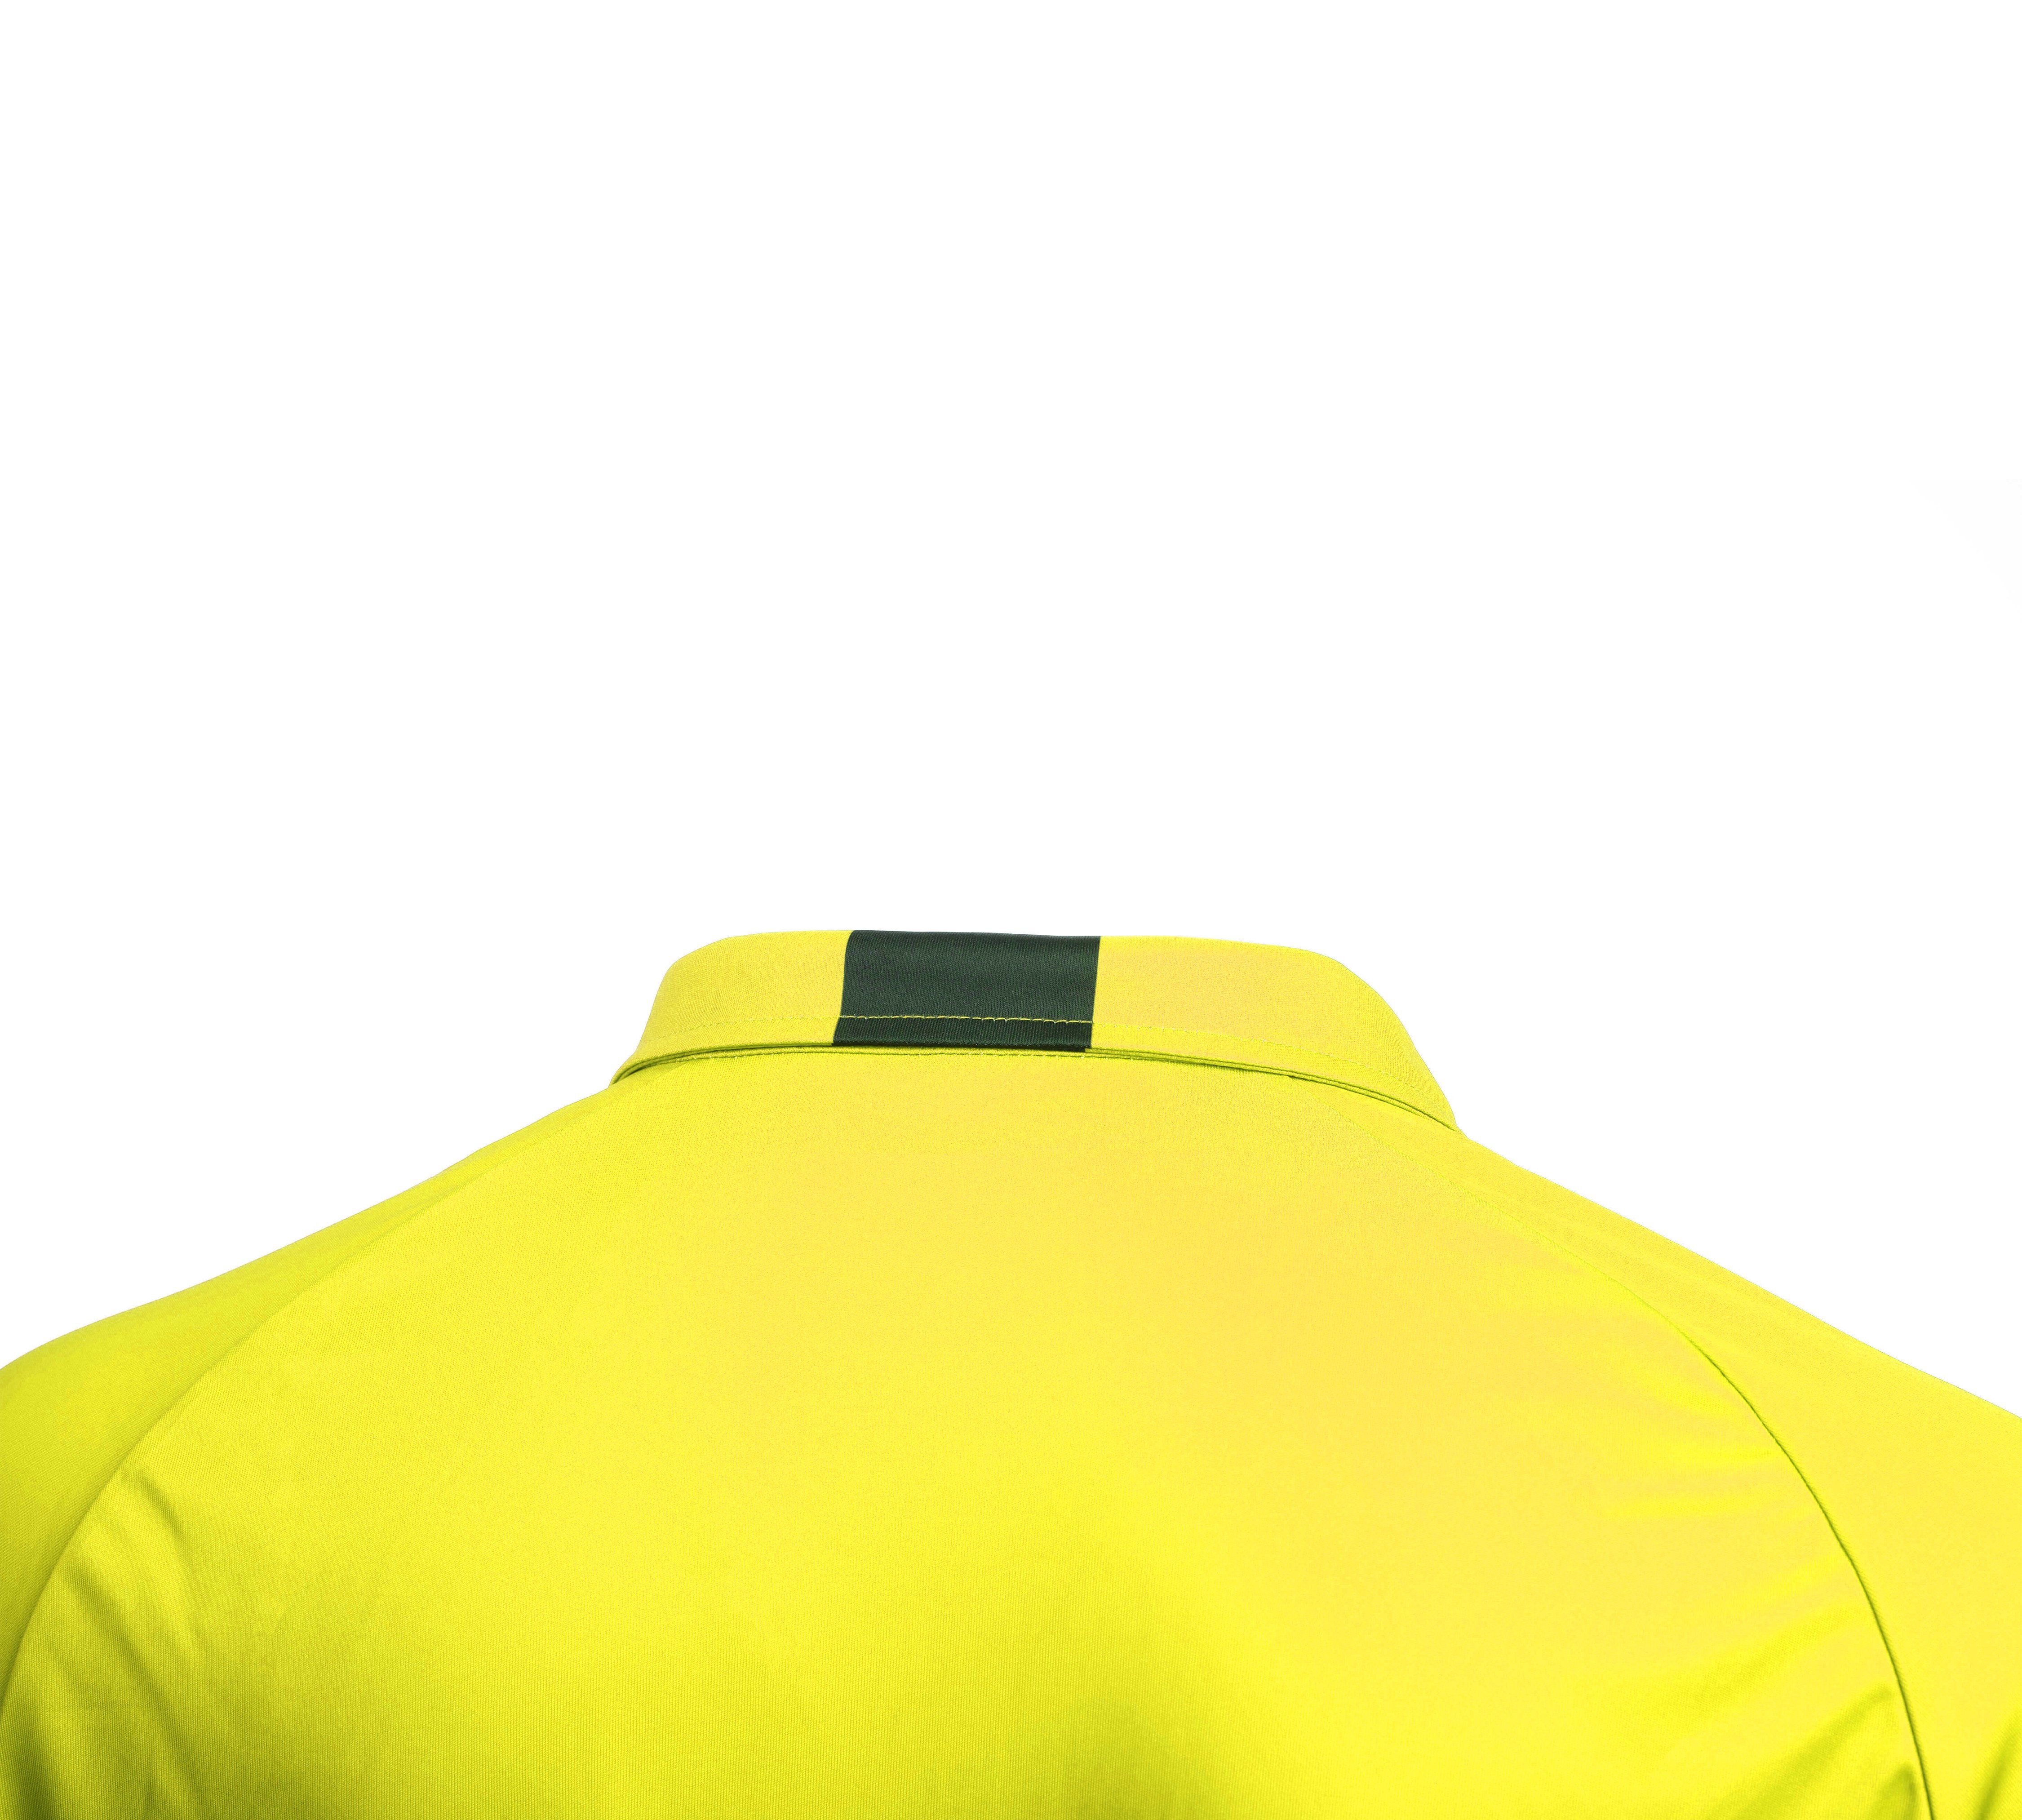 NCAA Men's Yellow Short Sleeve Soccer Referee Shirt